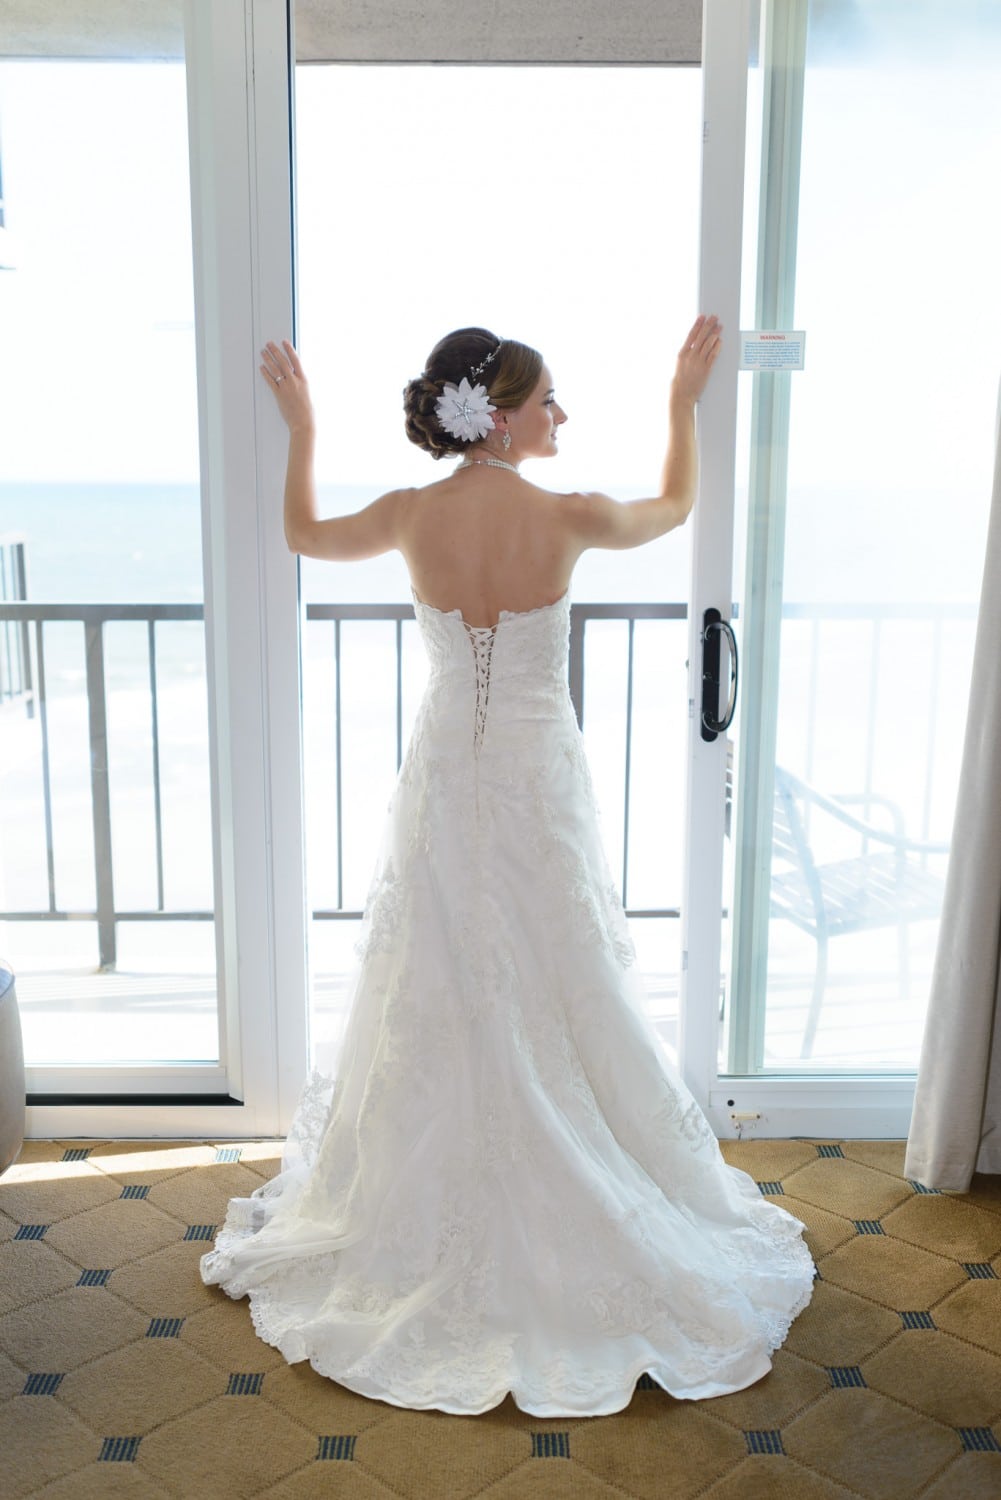 Bride standing in balcony doorway - Hilton at Kingston Plantation